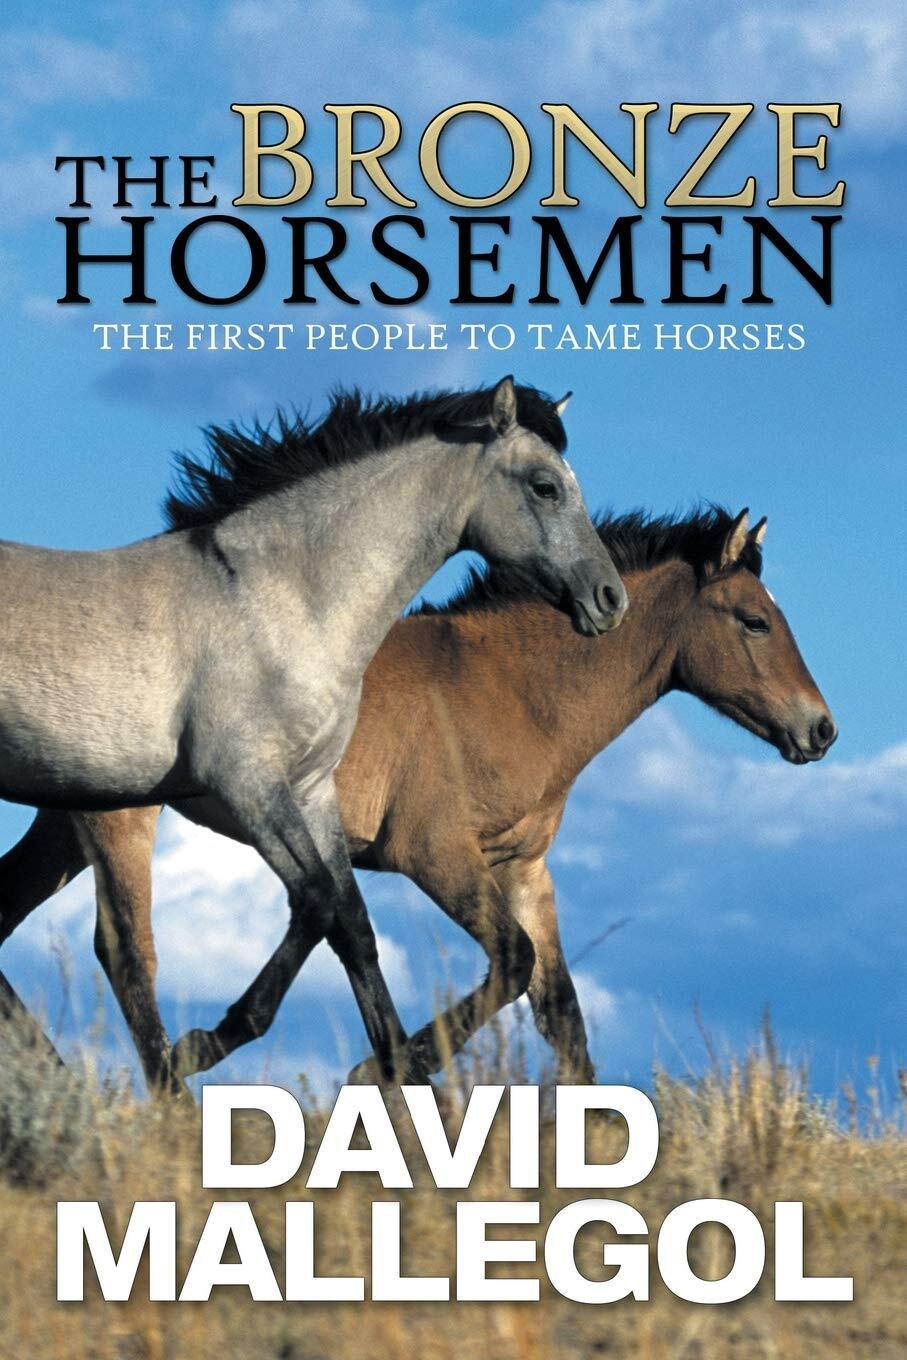 the bronze horseman book 2